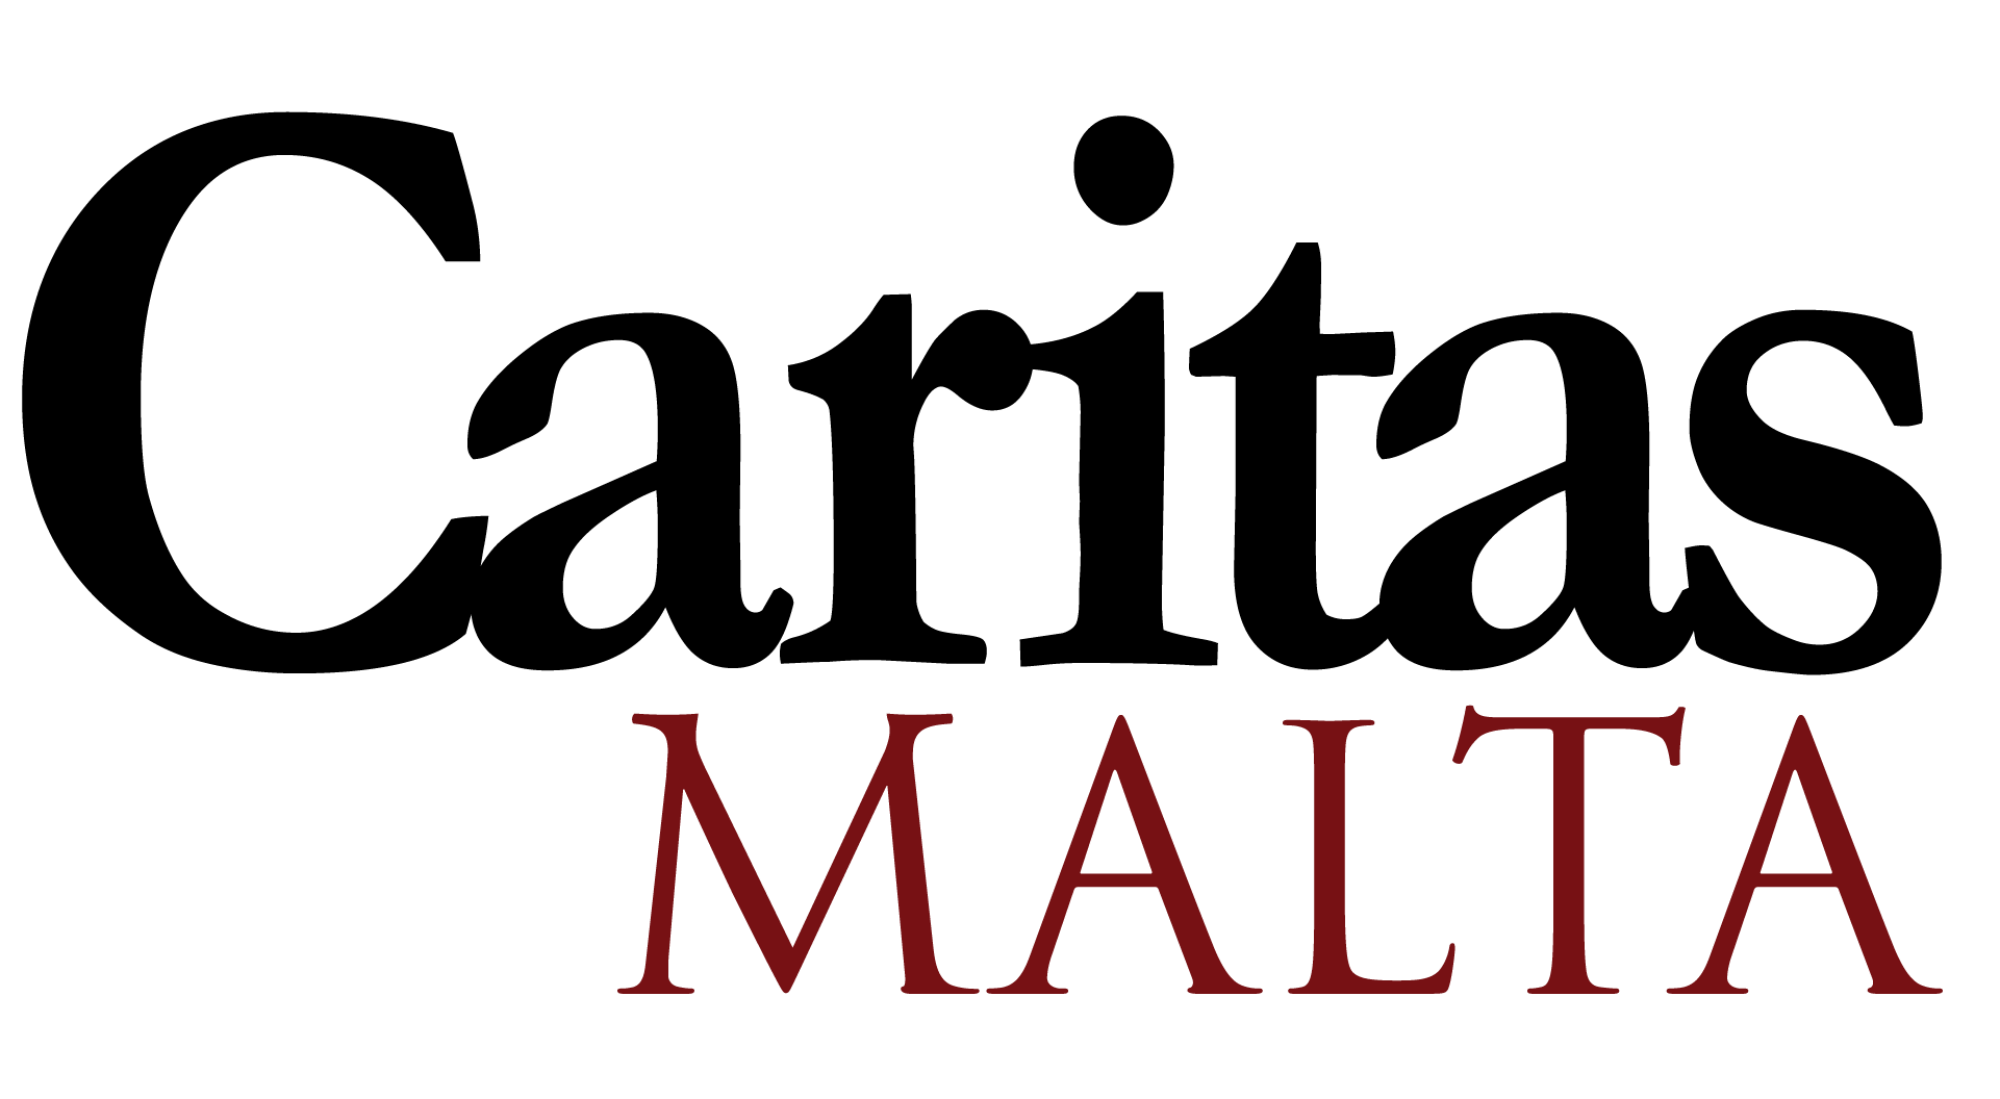 Malta Logo - Cropped Caritas Malta Logo 01 1.png